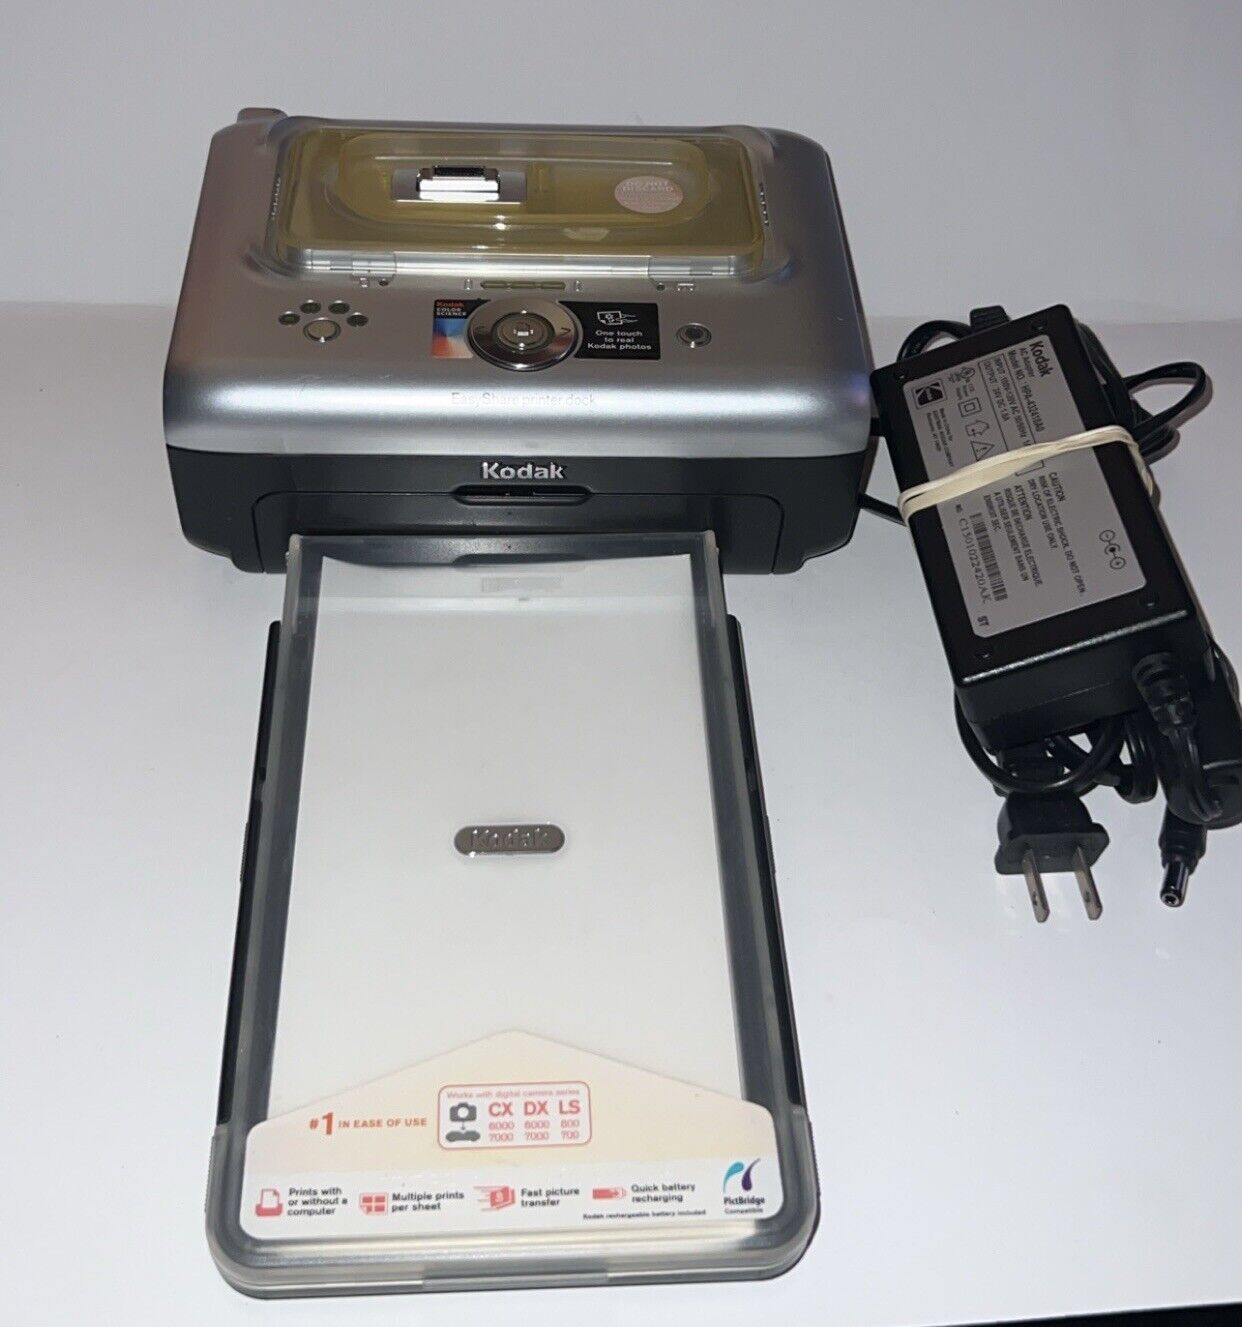 Kodak EasyShare Series 3 Digital Photo Thermal Printer Dock And Paper Tray